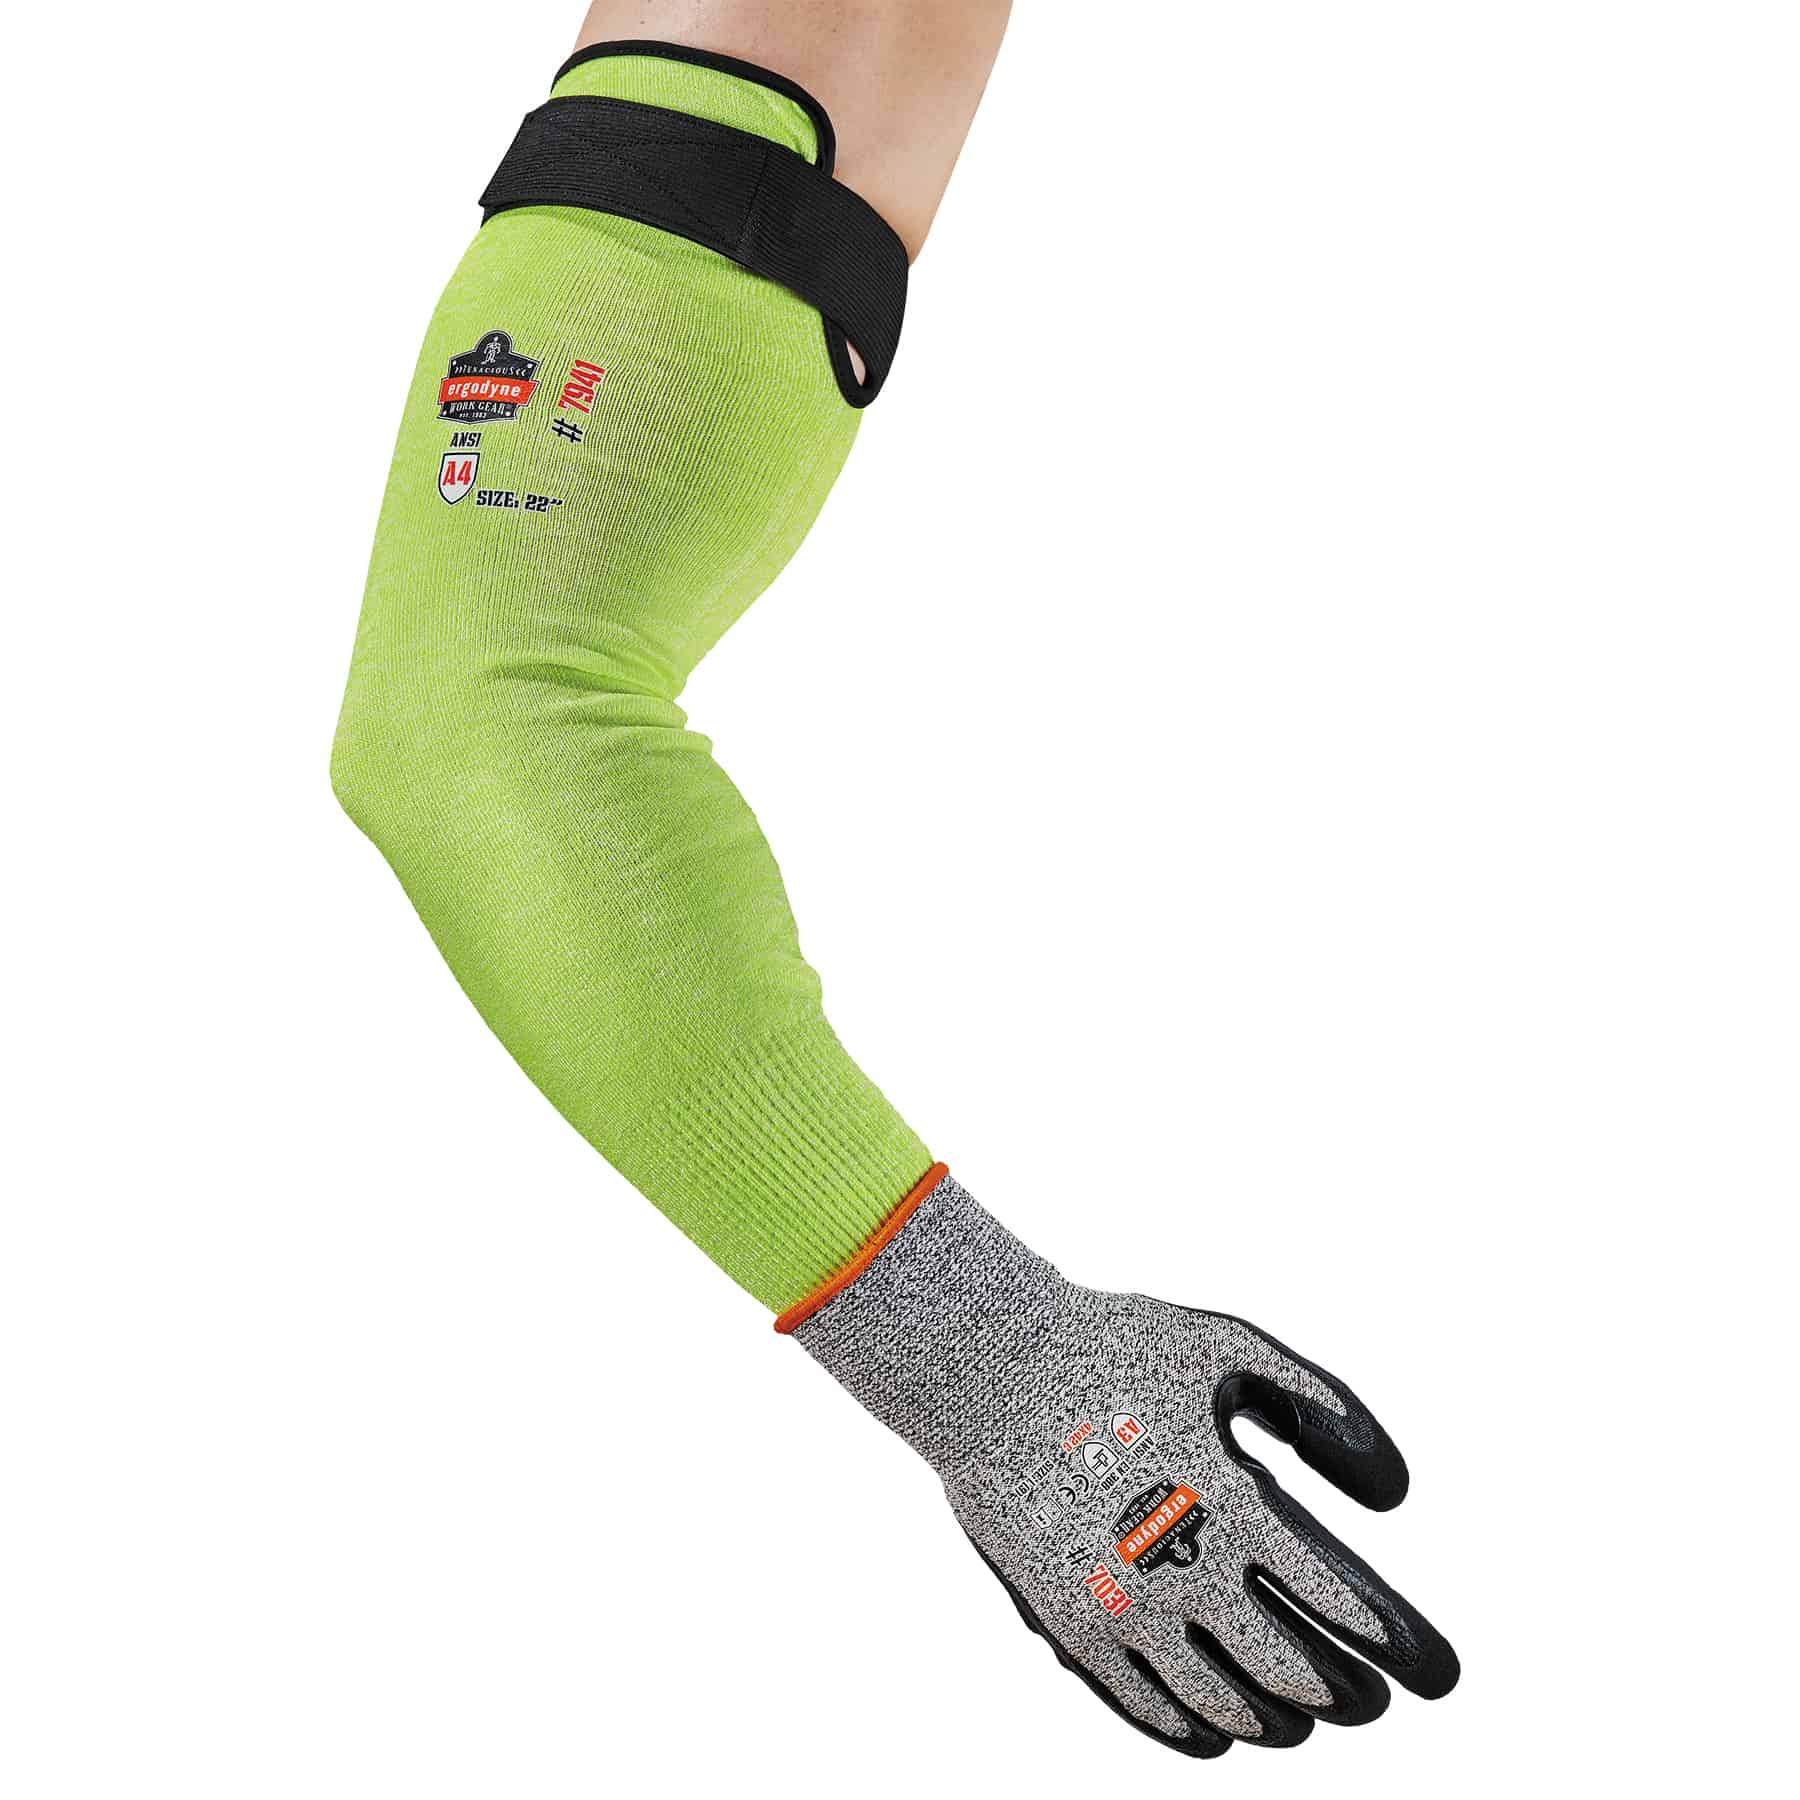 Ergodyne ProFlex 7941 PR Cut Resistant Arm Sleeve Pair 22 inch Lime, Green